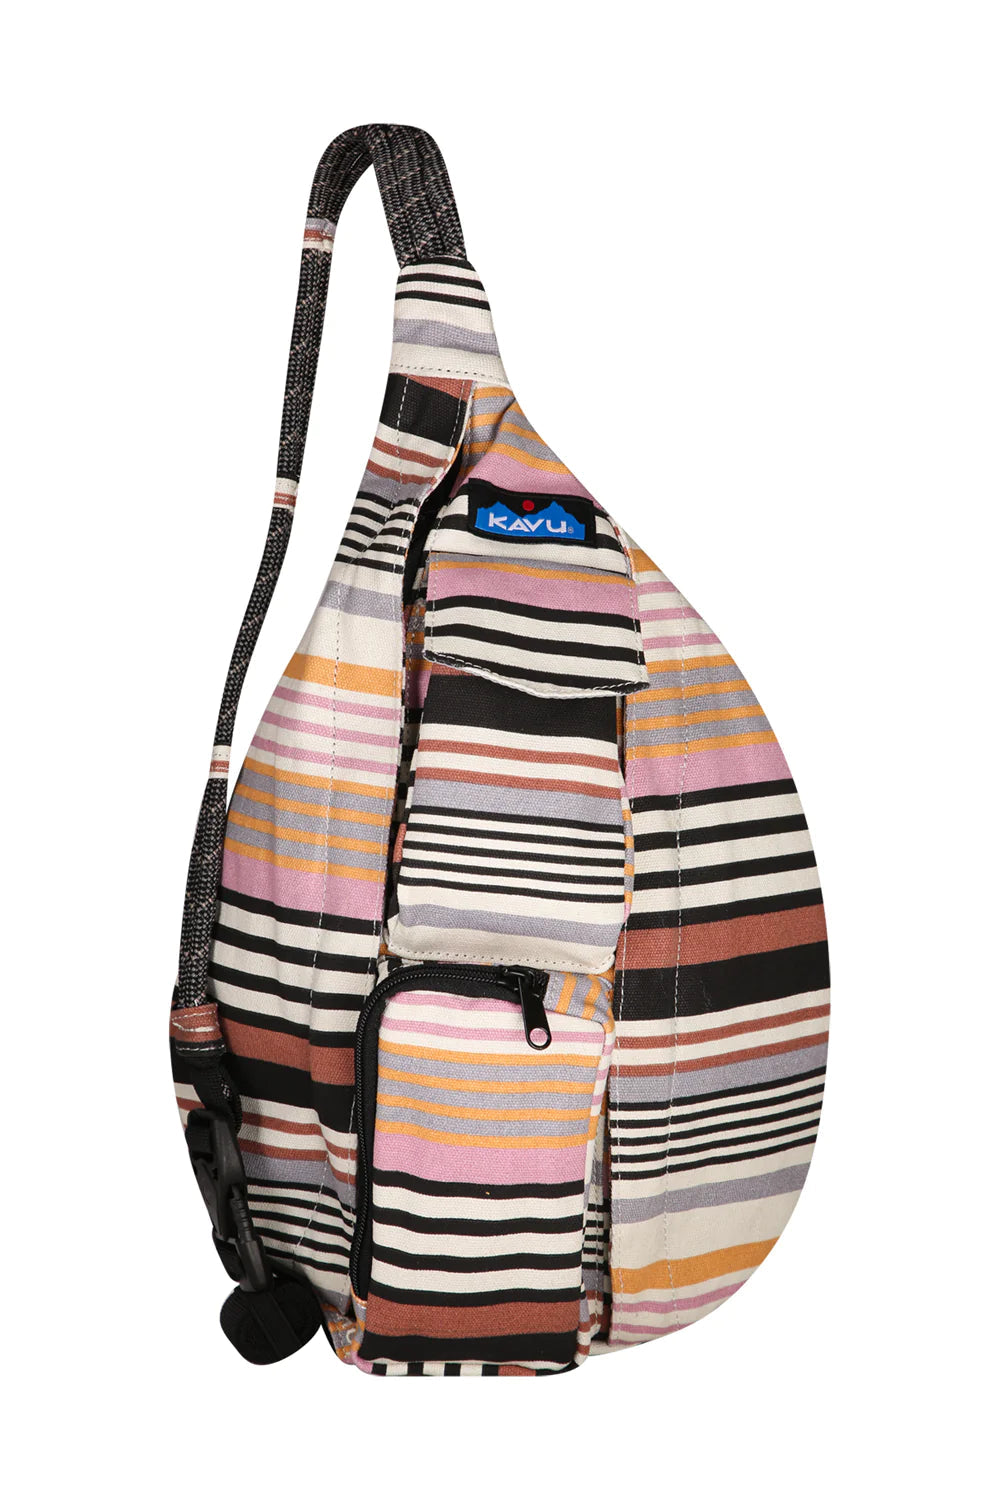 KAVU Bags for sale in Newport Heights, Oregon | Facebook Marketplace |  Facebook